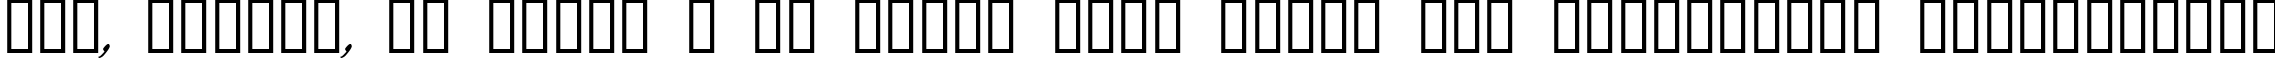 Пример написания шрифтом Blue Mutant Double Serif текста на украинском